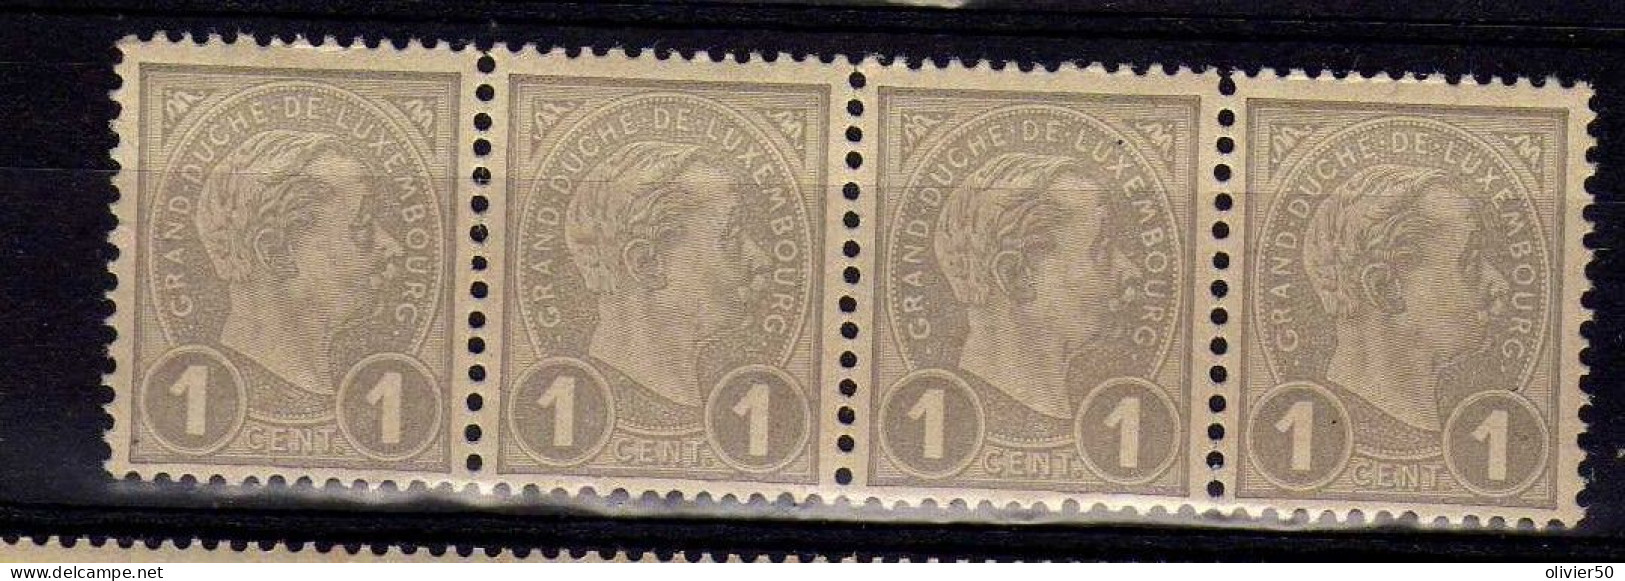 Luxembourg - (1895) - 1 C.  Grand-Duc Adolphe Ier  -  Neufs** - MNH - 1895 Adolfo De Perfíl